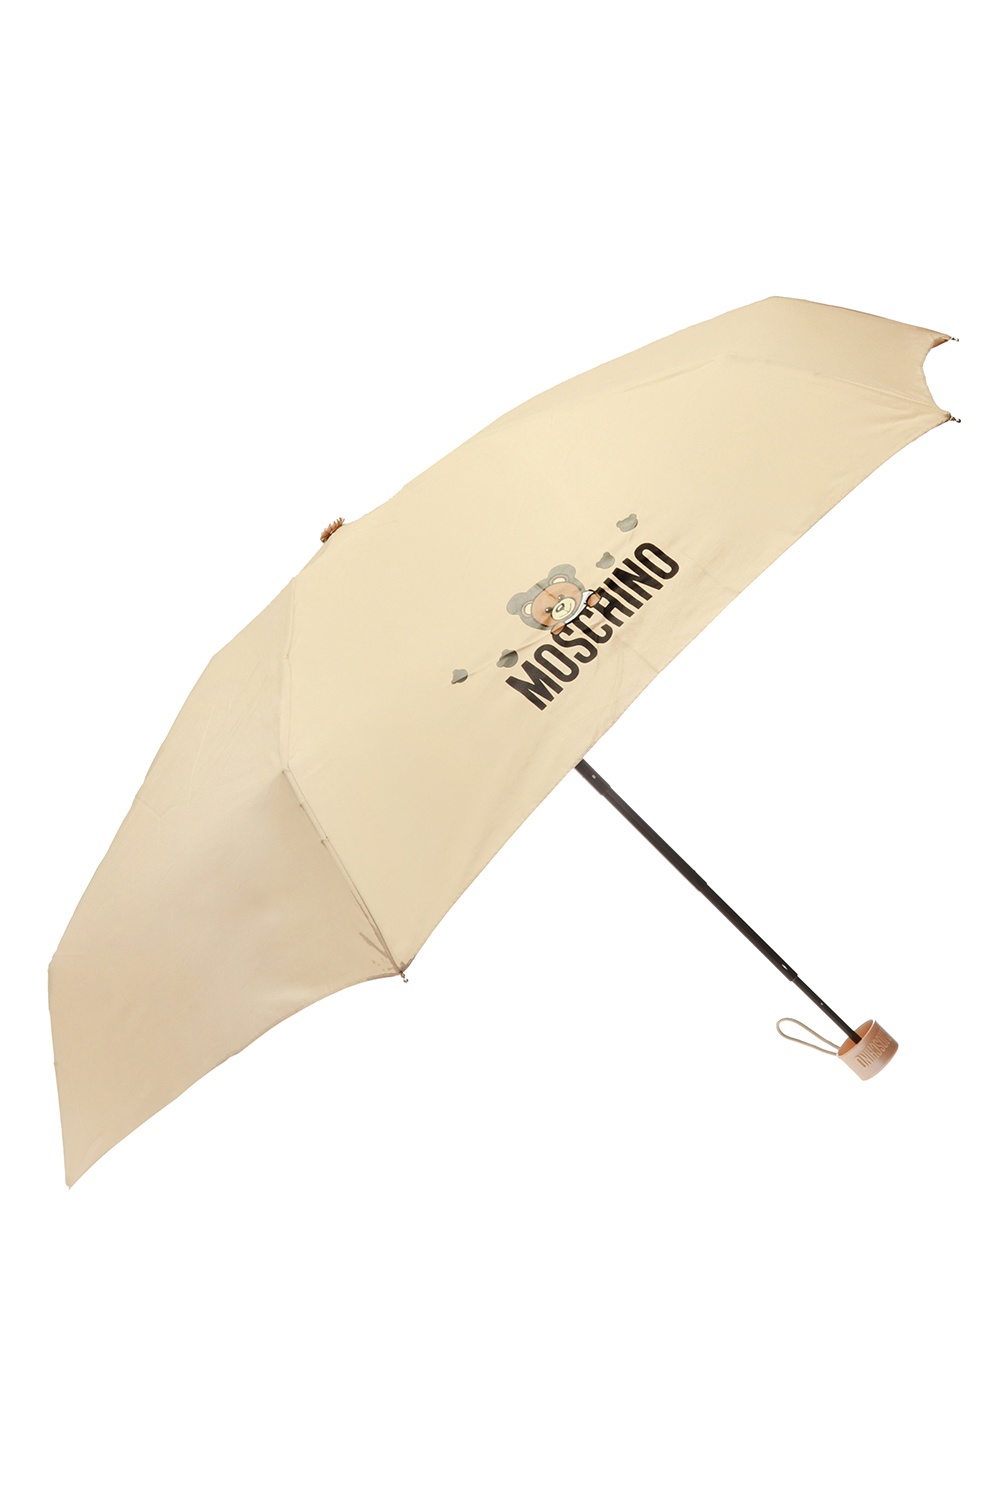 moschino bear umbrella